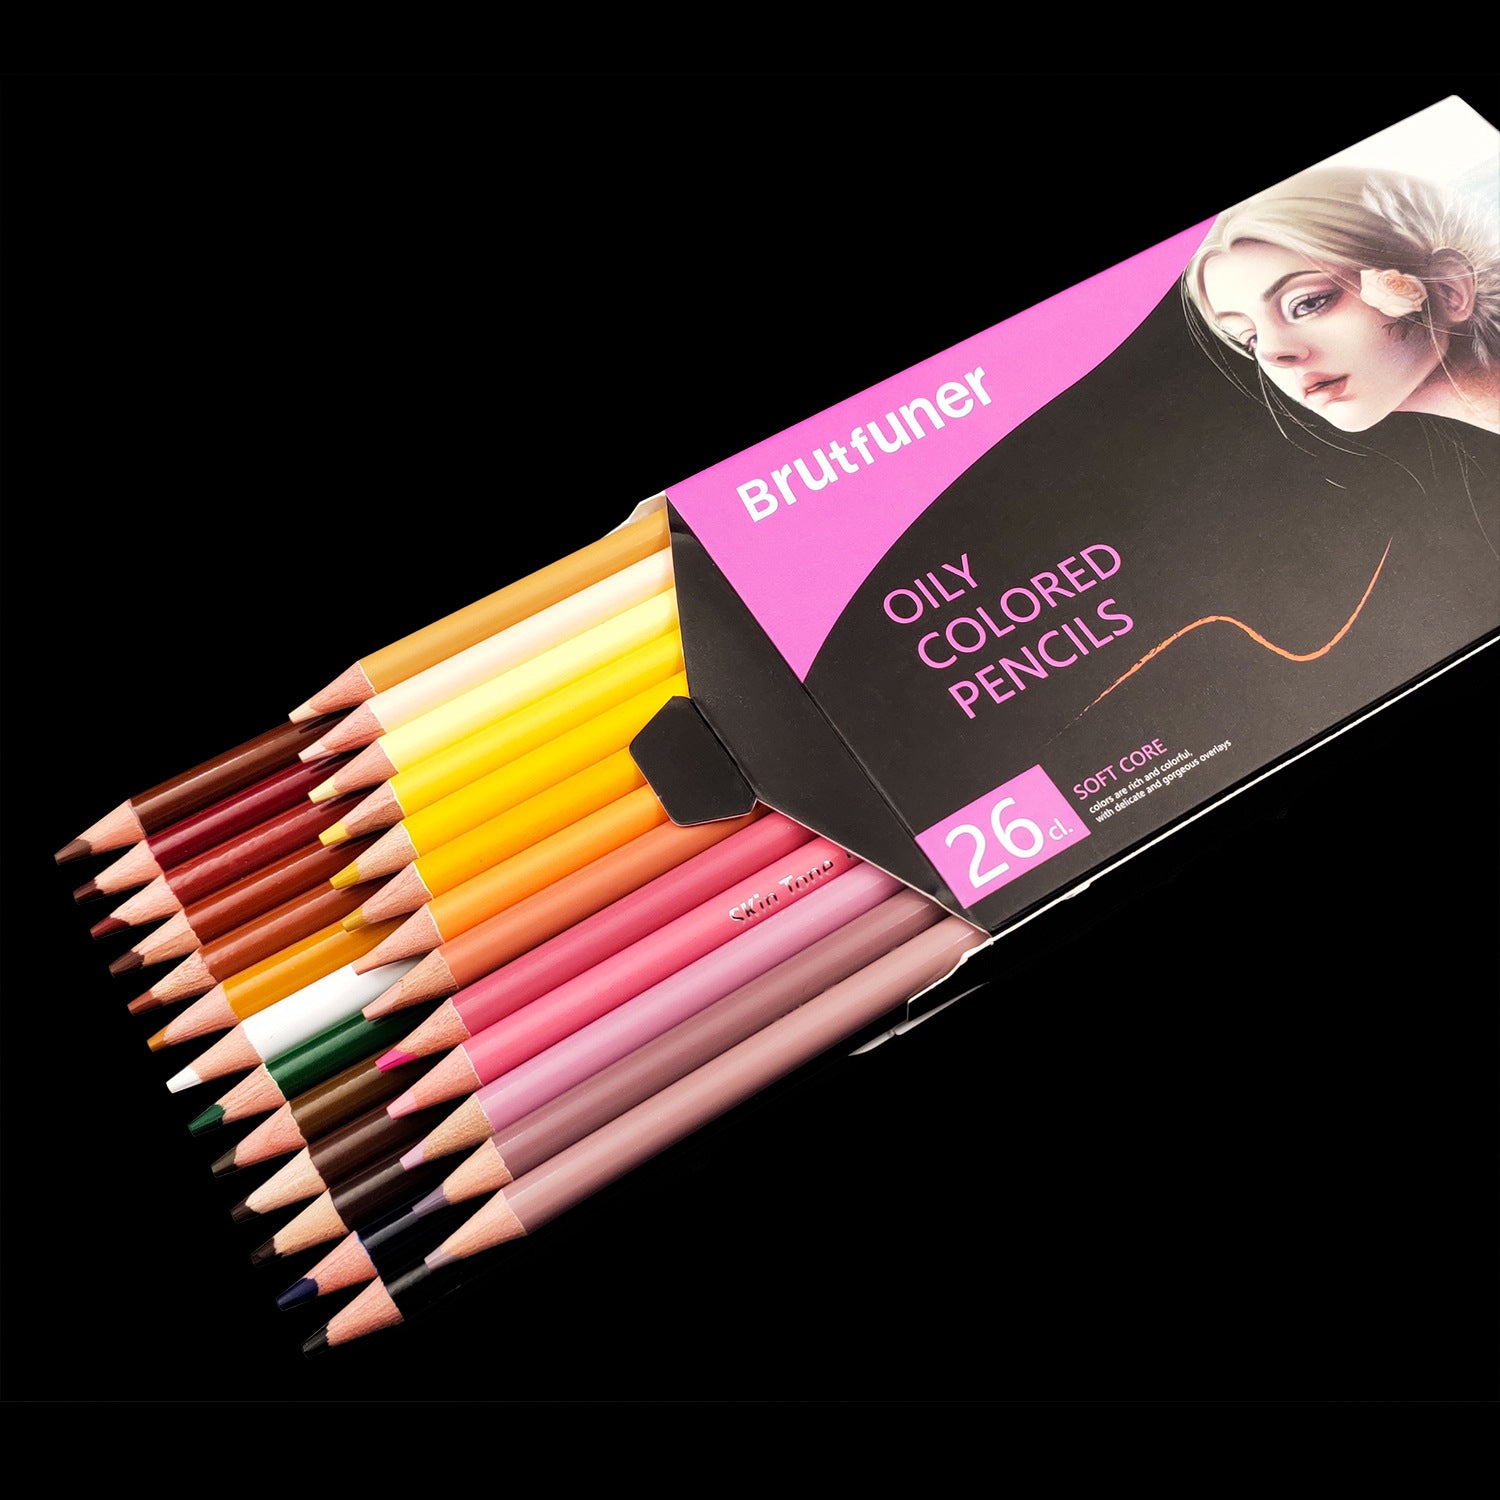 BRUTFUNER Skin Tone Colored Pencils 26/50/72 Colors